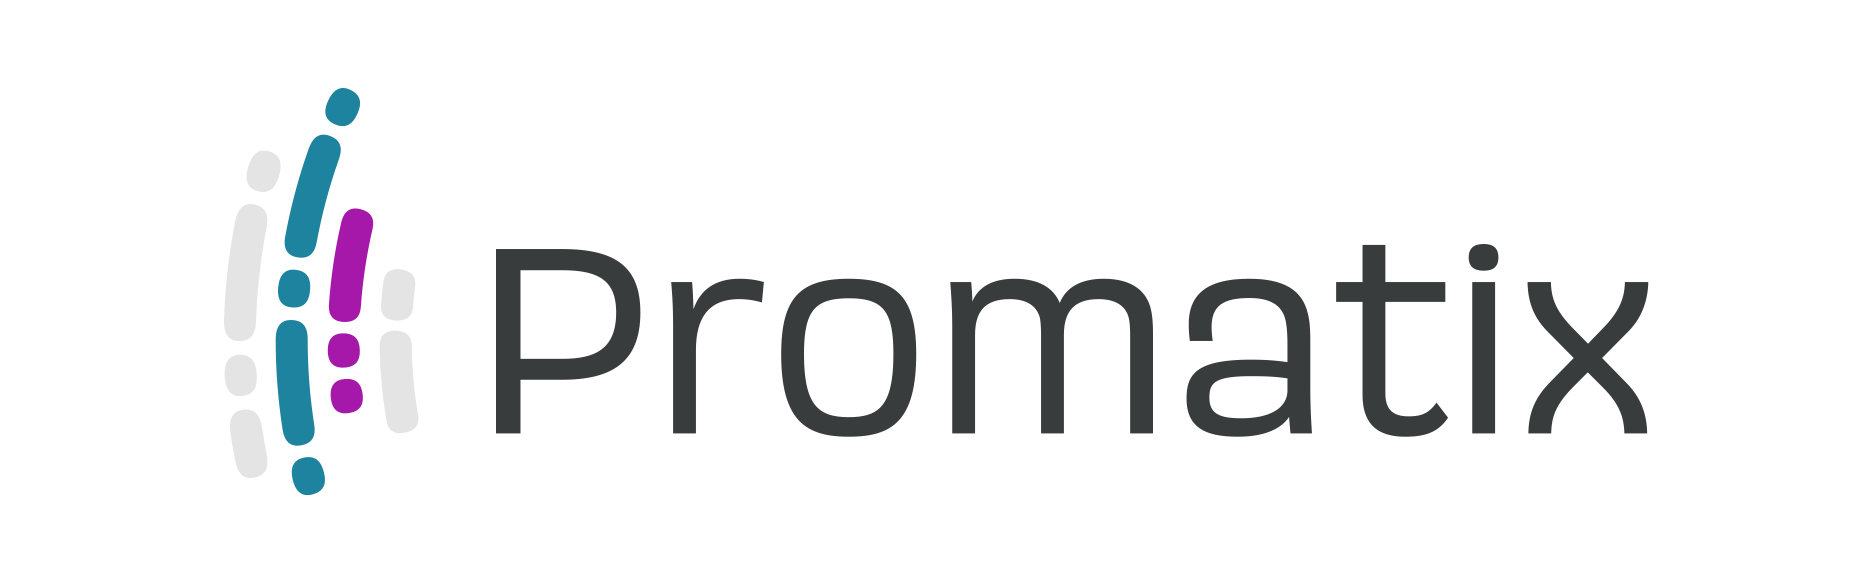 Promatix_logo.png